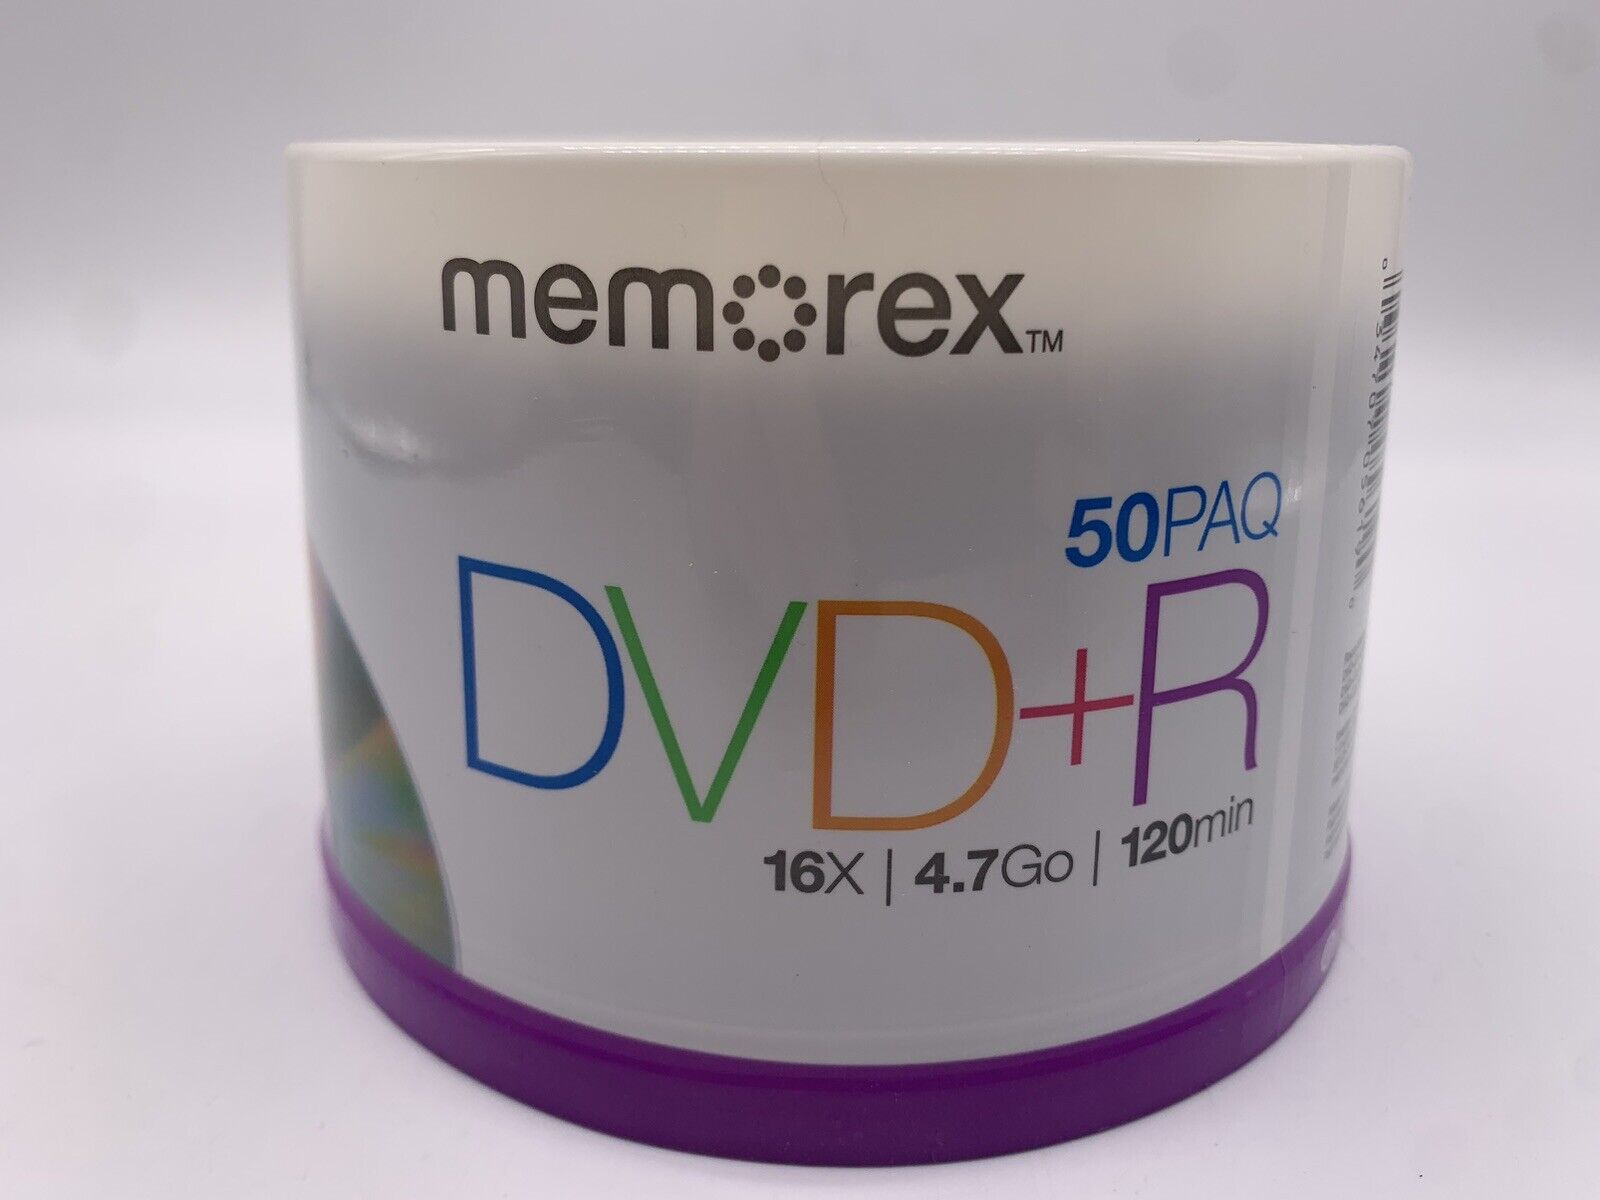 Memorex DVD+R 16x 4.7GB 120 min 50 Pk Spindle Blank Discs Media Disks New